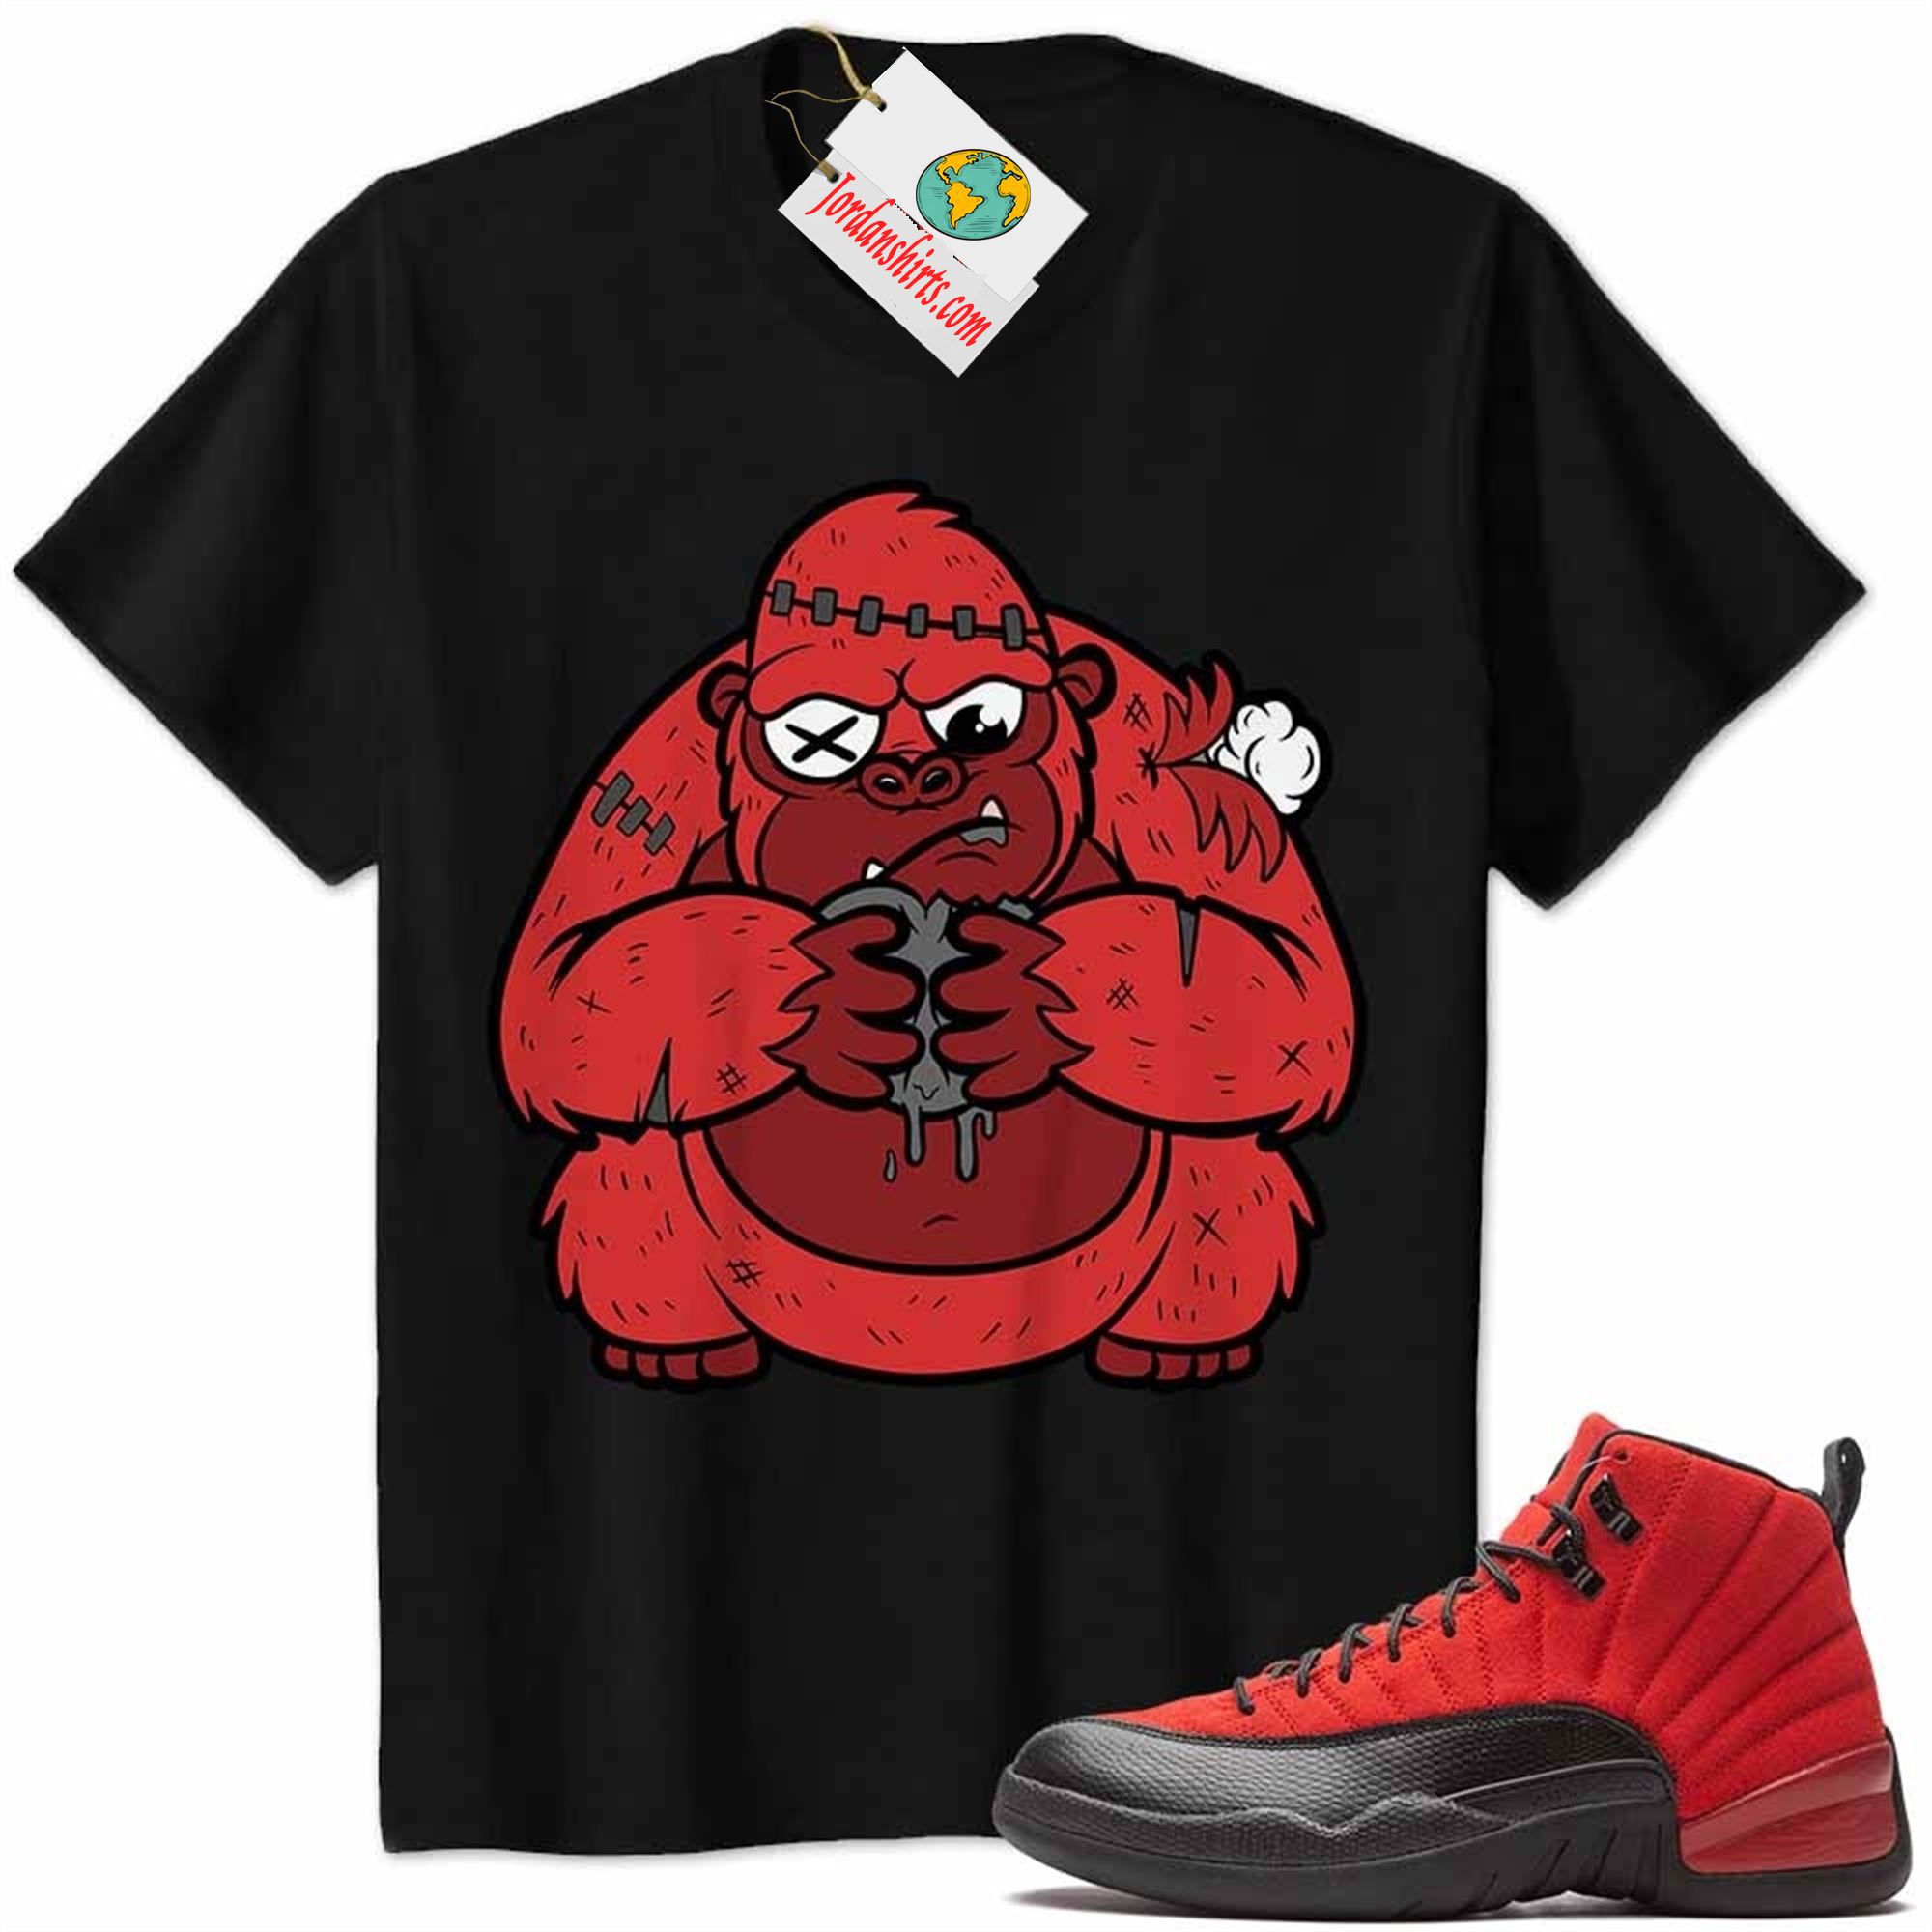 Jordan 12 Shirt, Cute Monkey Broken Heart Black Air Jordan 12 Reverse Flu Game 12s Size Up To 5xl